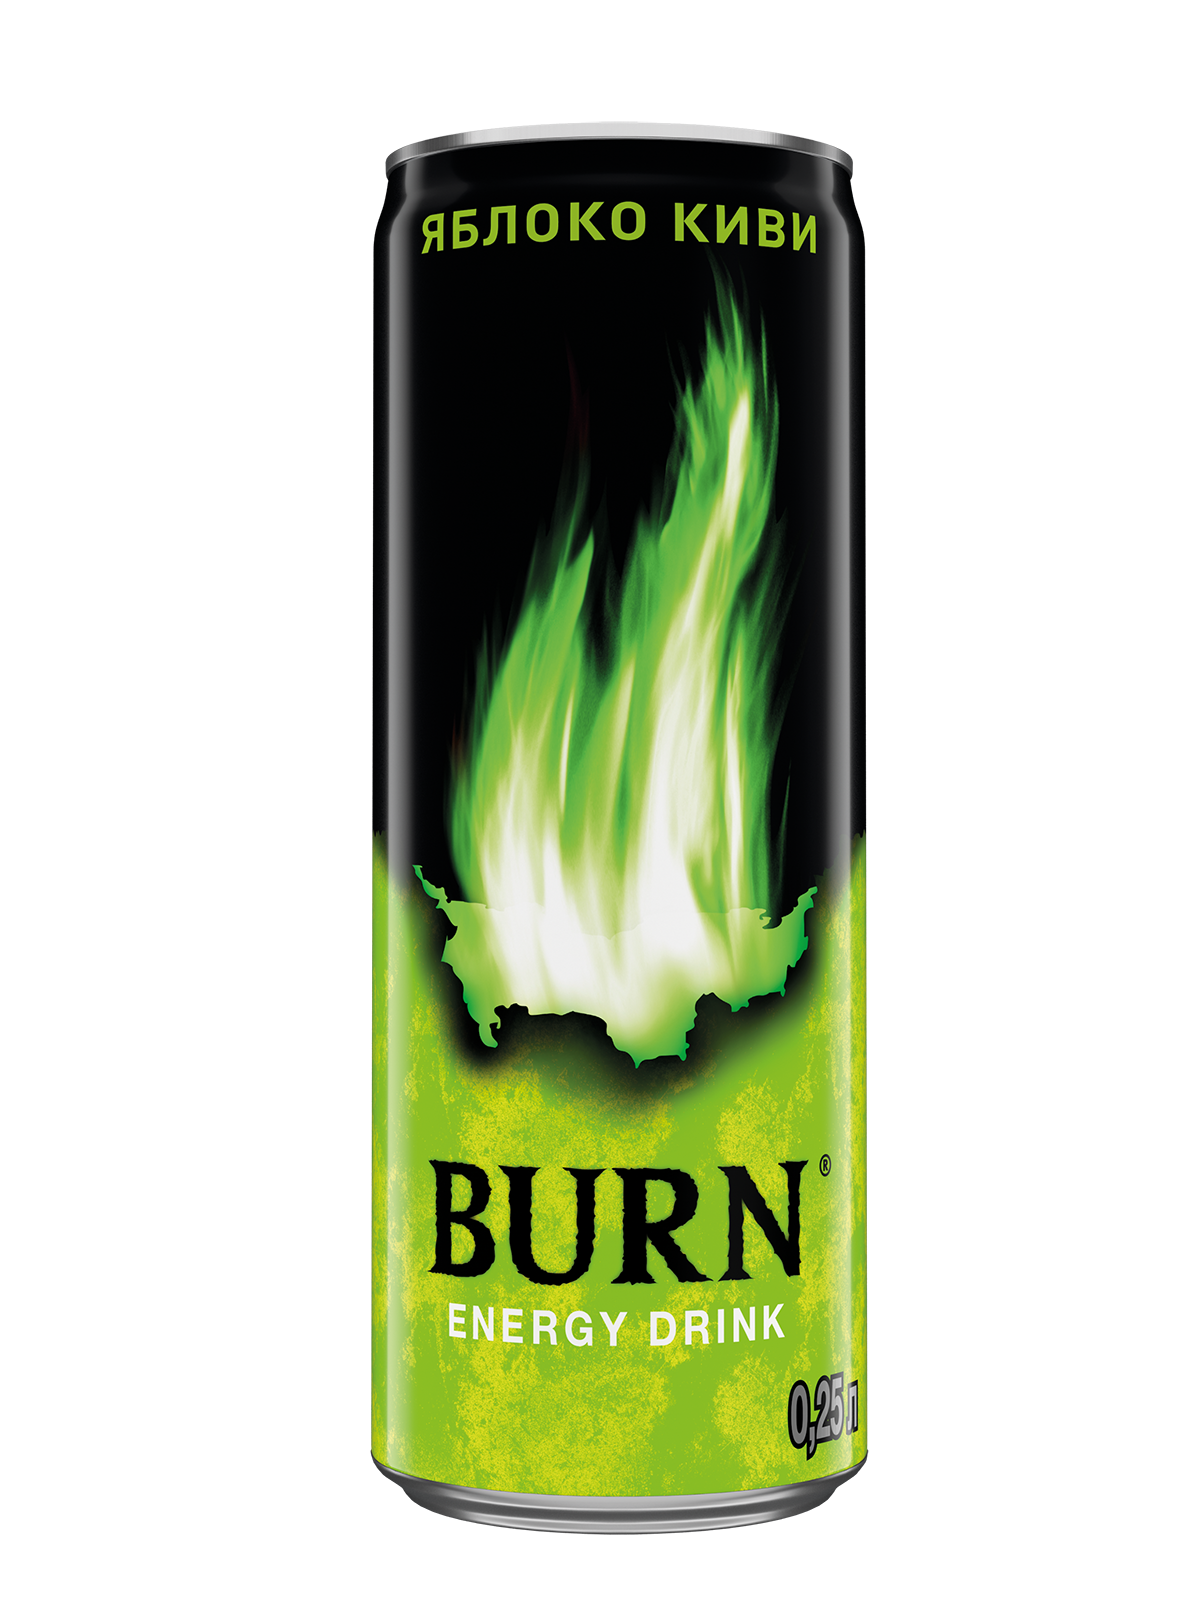 Золотой берн. Энергетический напиток "Burn" тёмная энергия 0.449л.. Энергетический напиток Берн 0,449л ж/б. Берн ж/б 0,449л темная энергия. Burn напиток энергетический дарк 0.449.